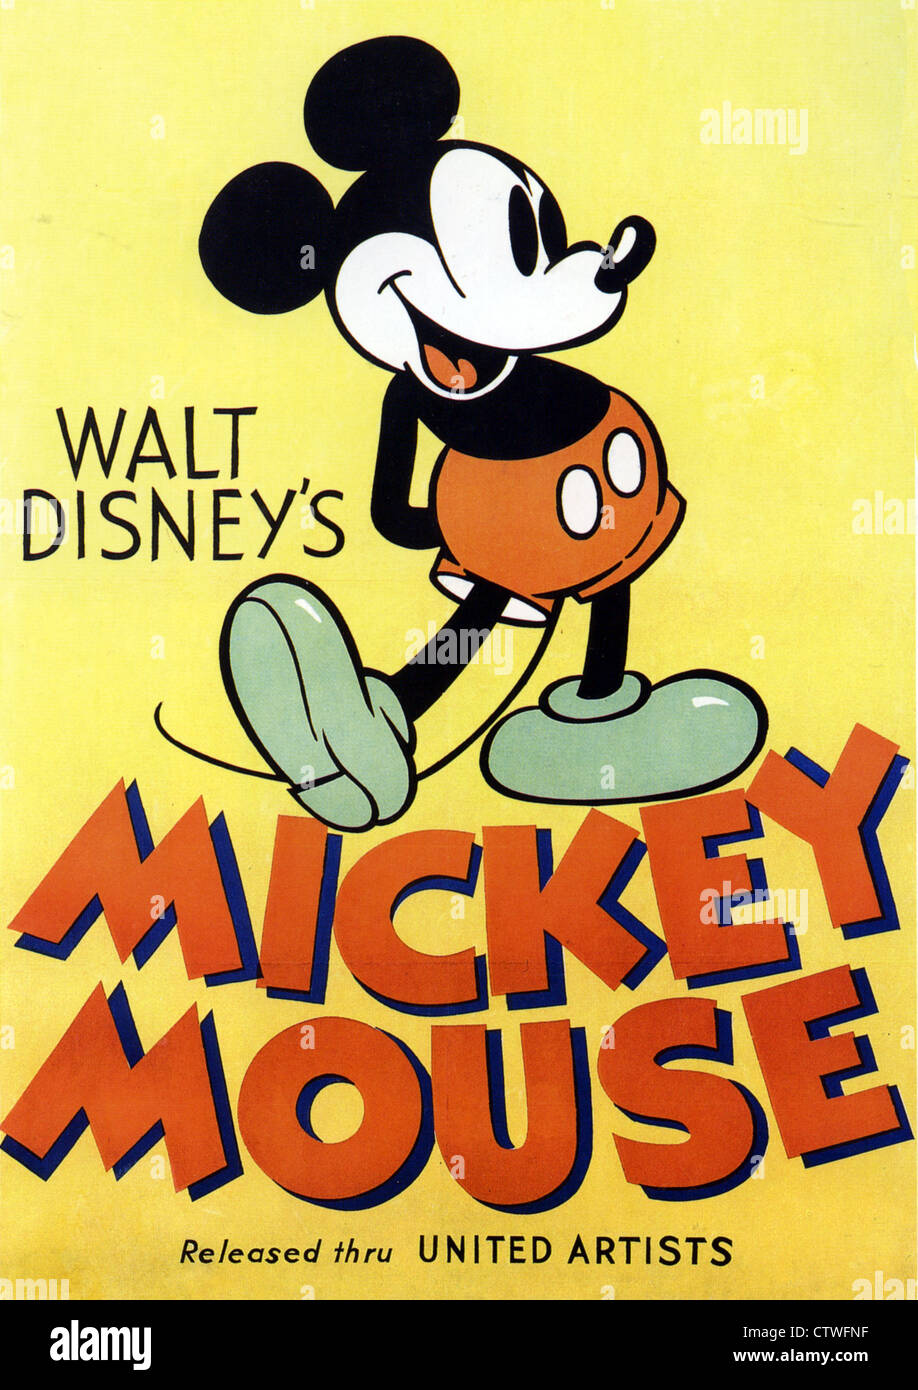 TIN SIGN Walt Disney Mickey Mouse Building A Building Cartoon Movie Art Poster